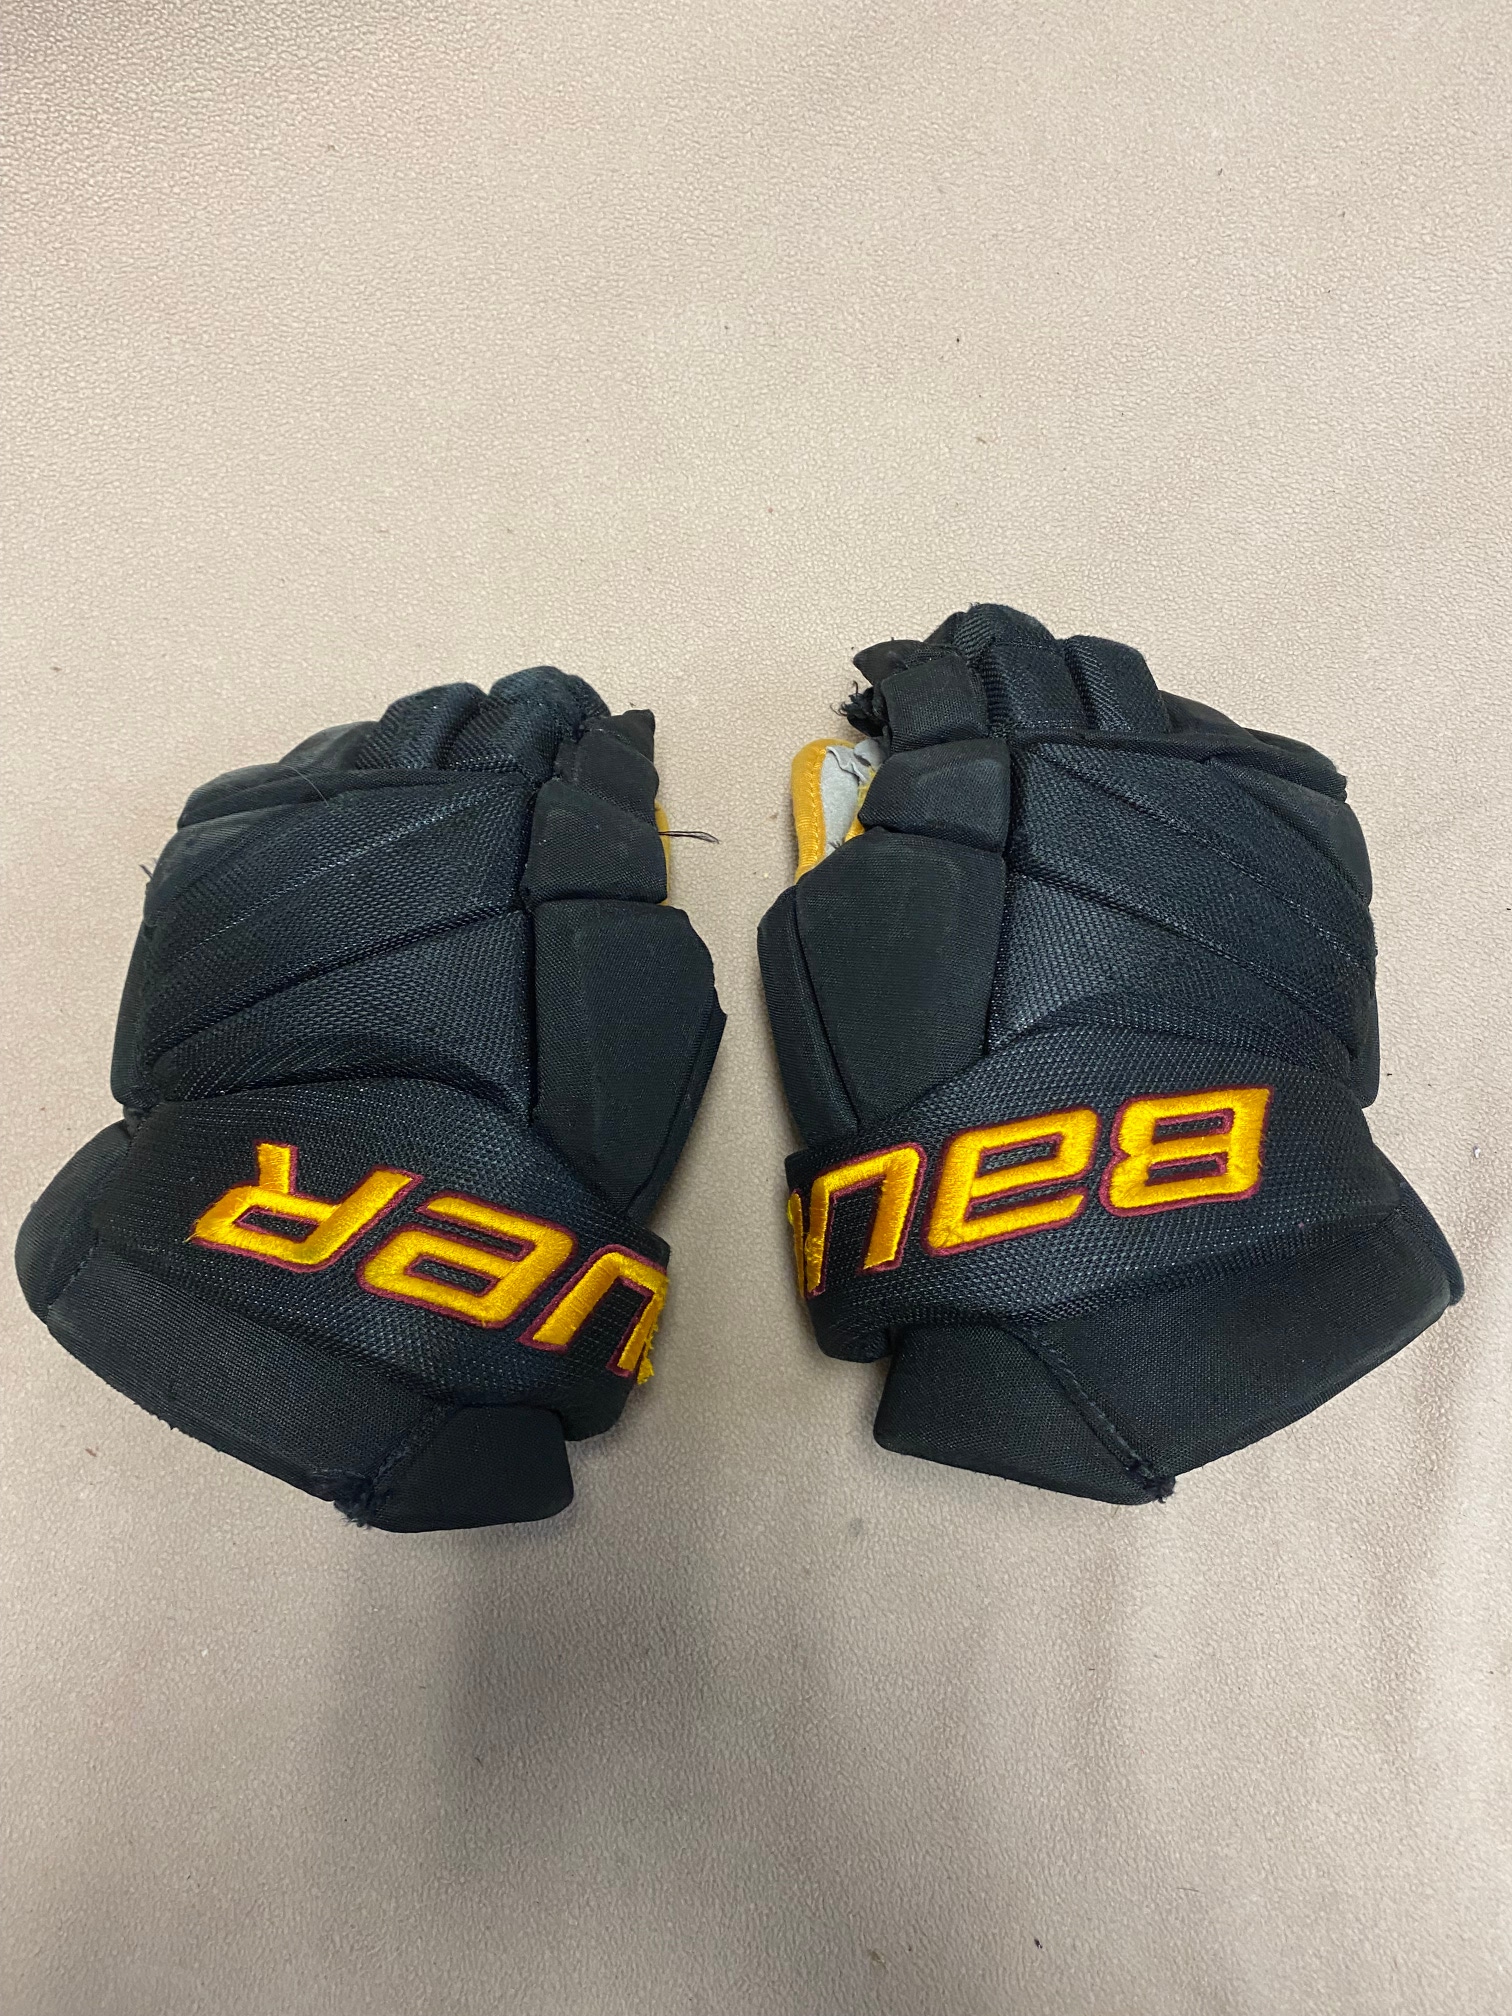 Used Bauer Sun Devil’s Gloves 13" Pro Stock